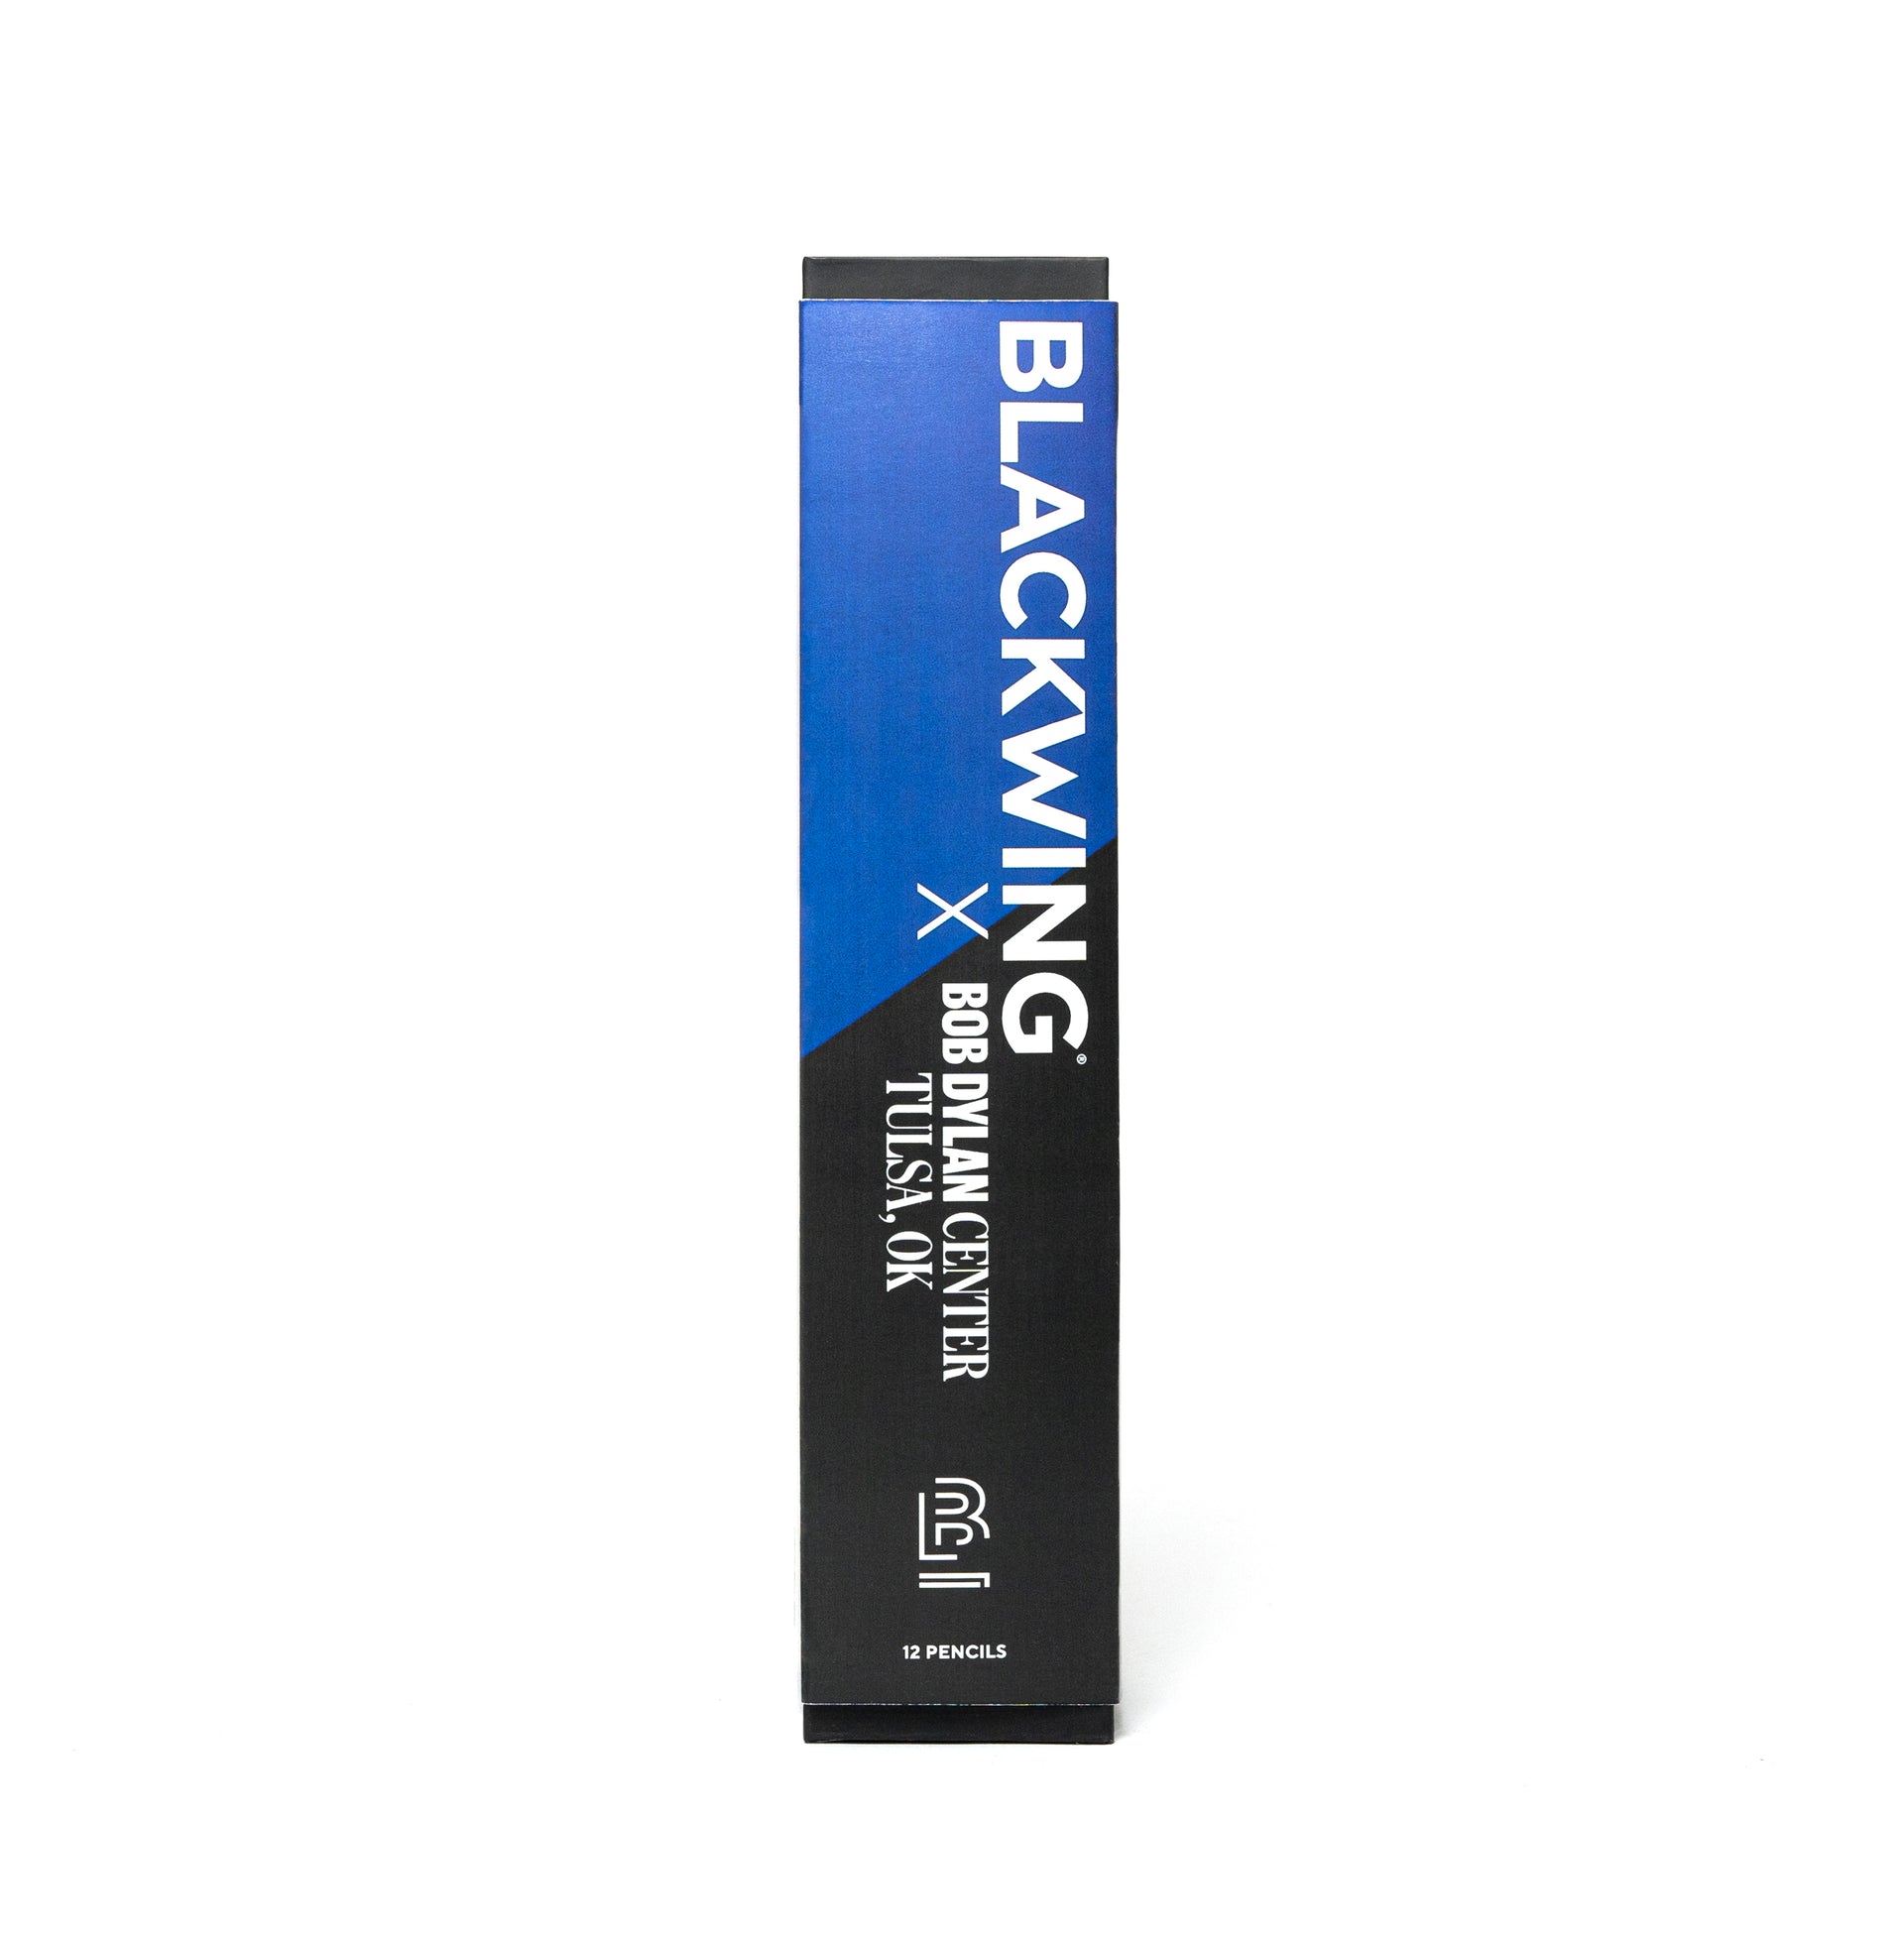 Blackwing Sampler Pack. 5 Pencils lab 11.26.21, Bob Dylan, Blue Era, Museum  Sunday, SCRAWLR 